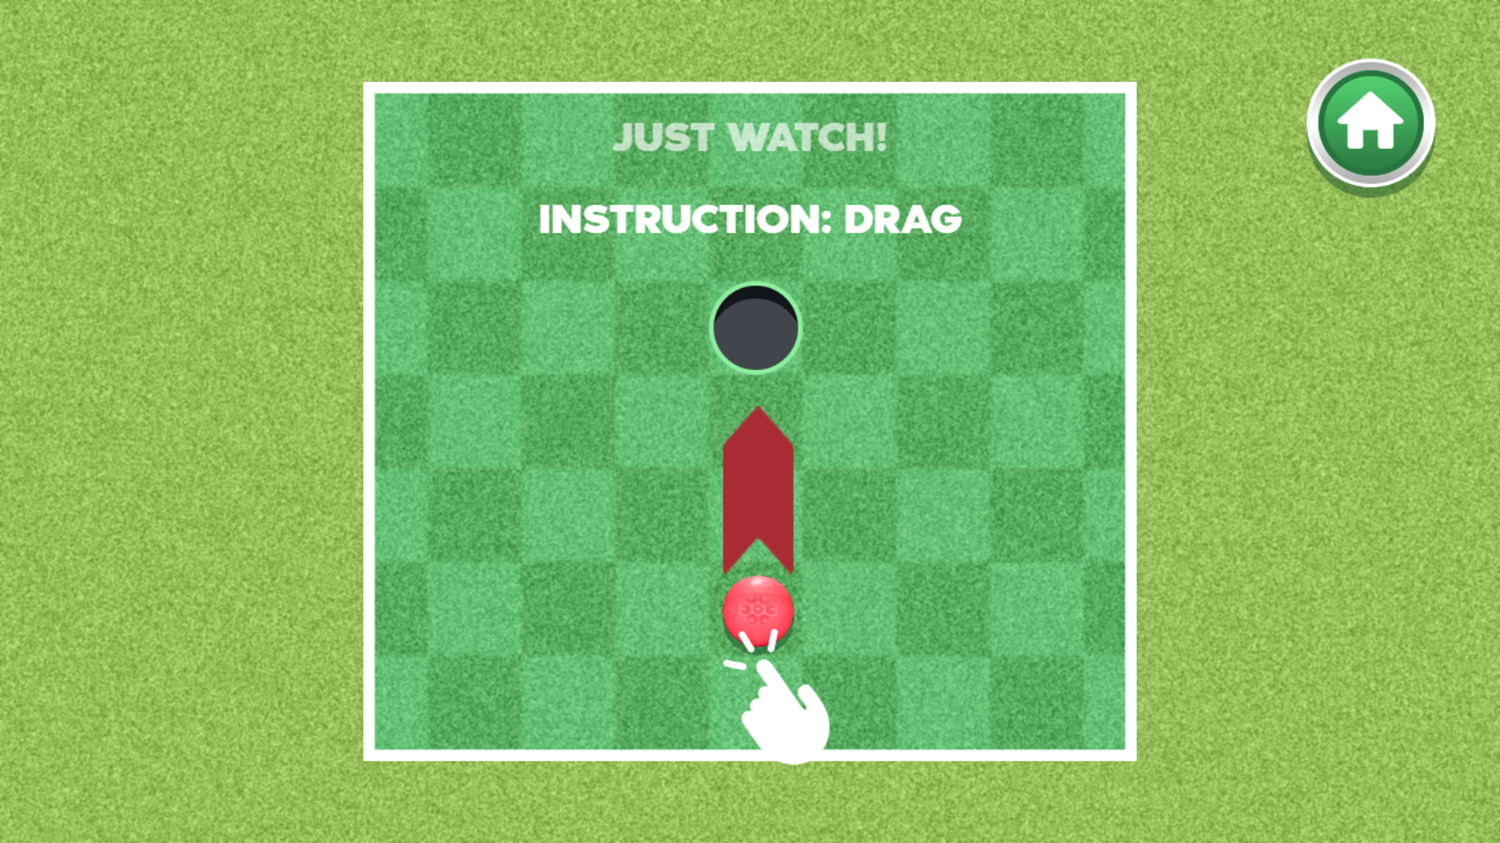 Golf With Buddies Game Instruction Screenshot.